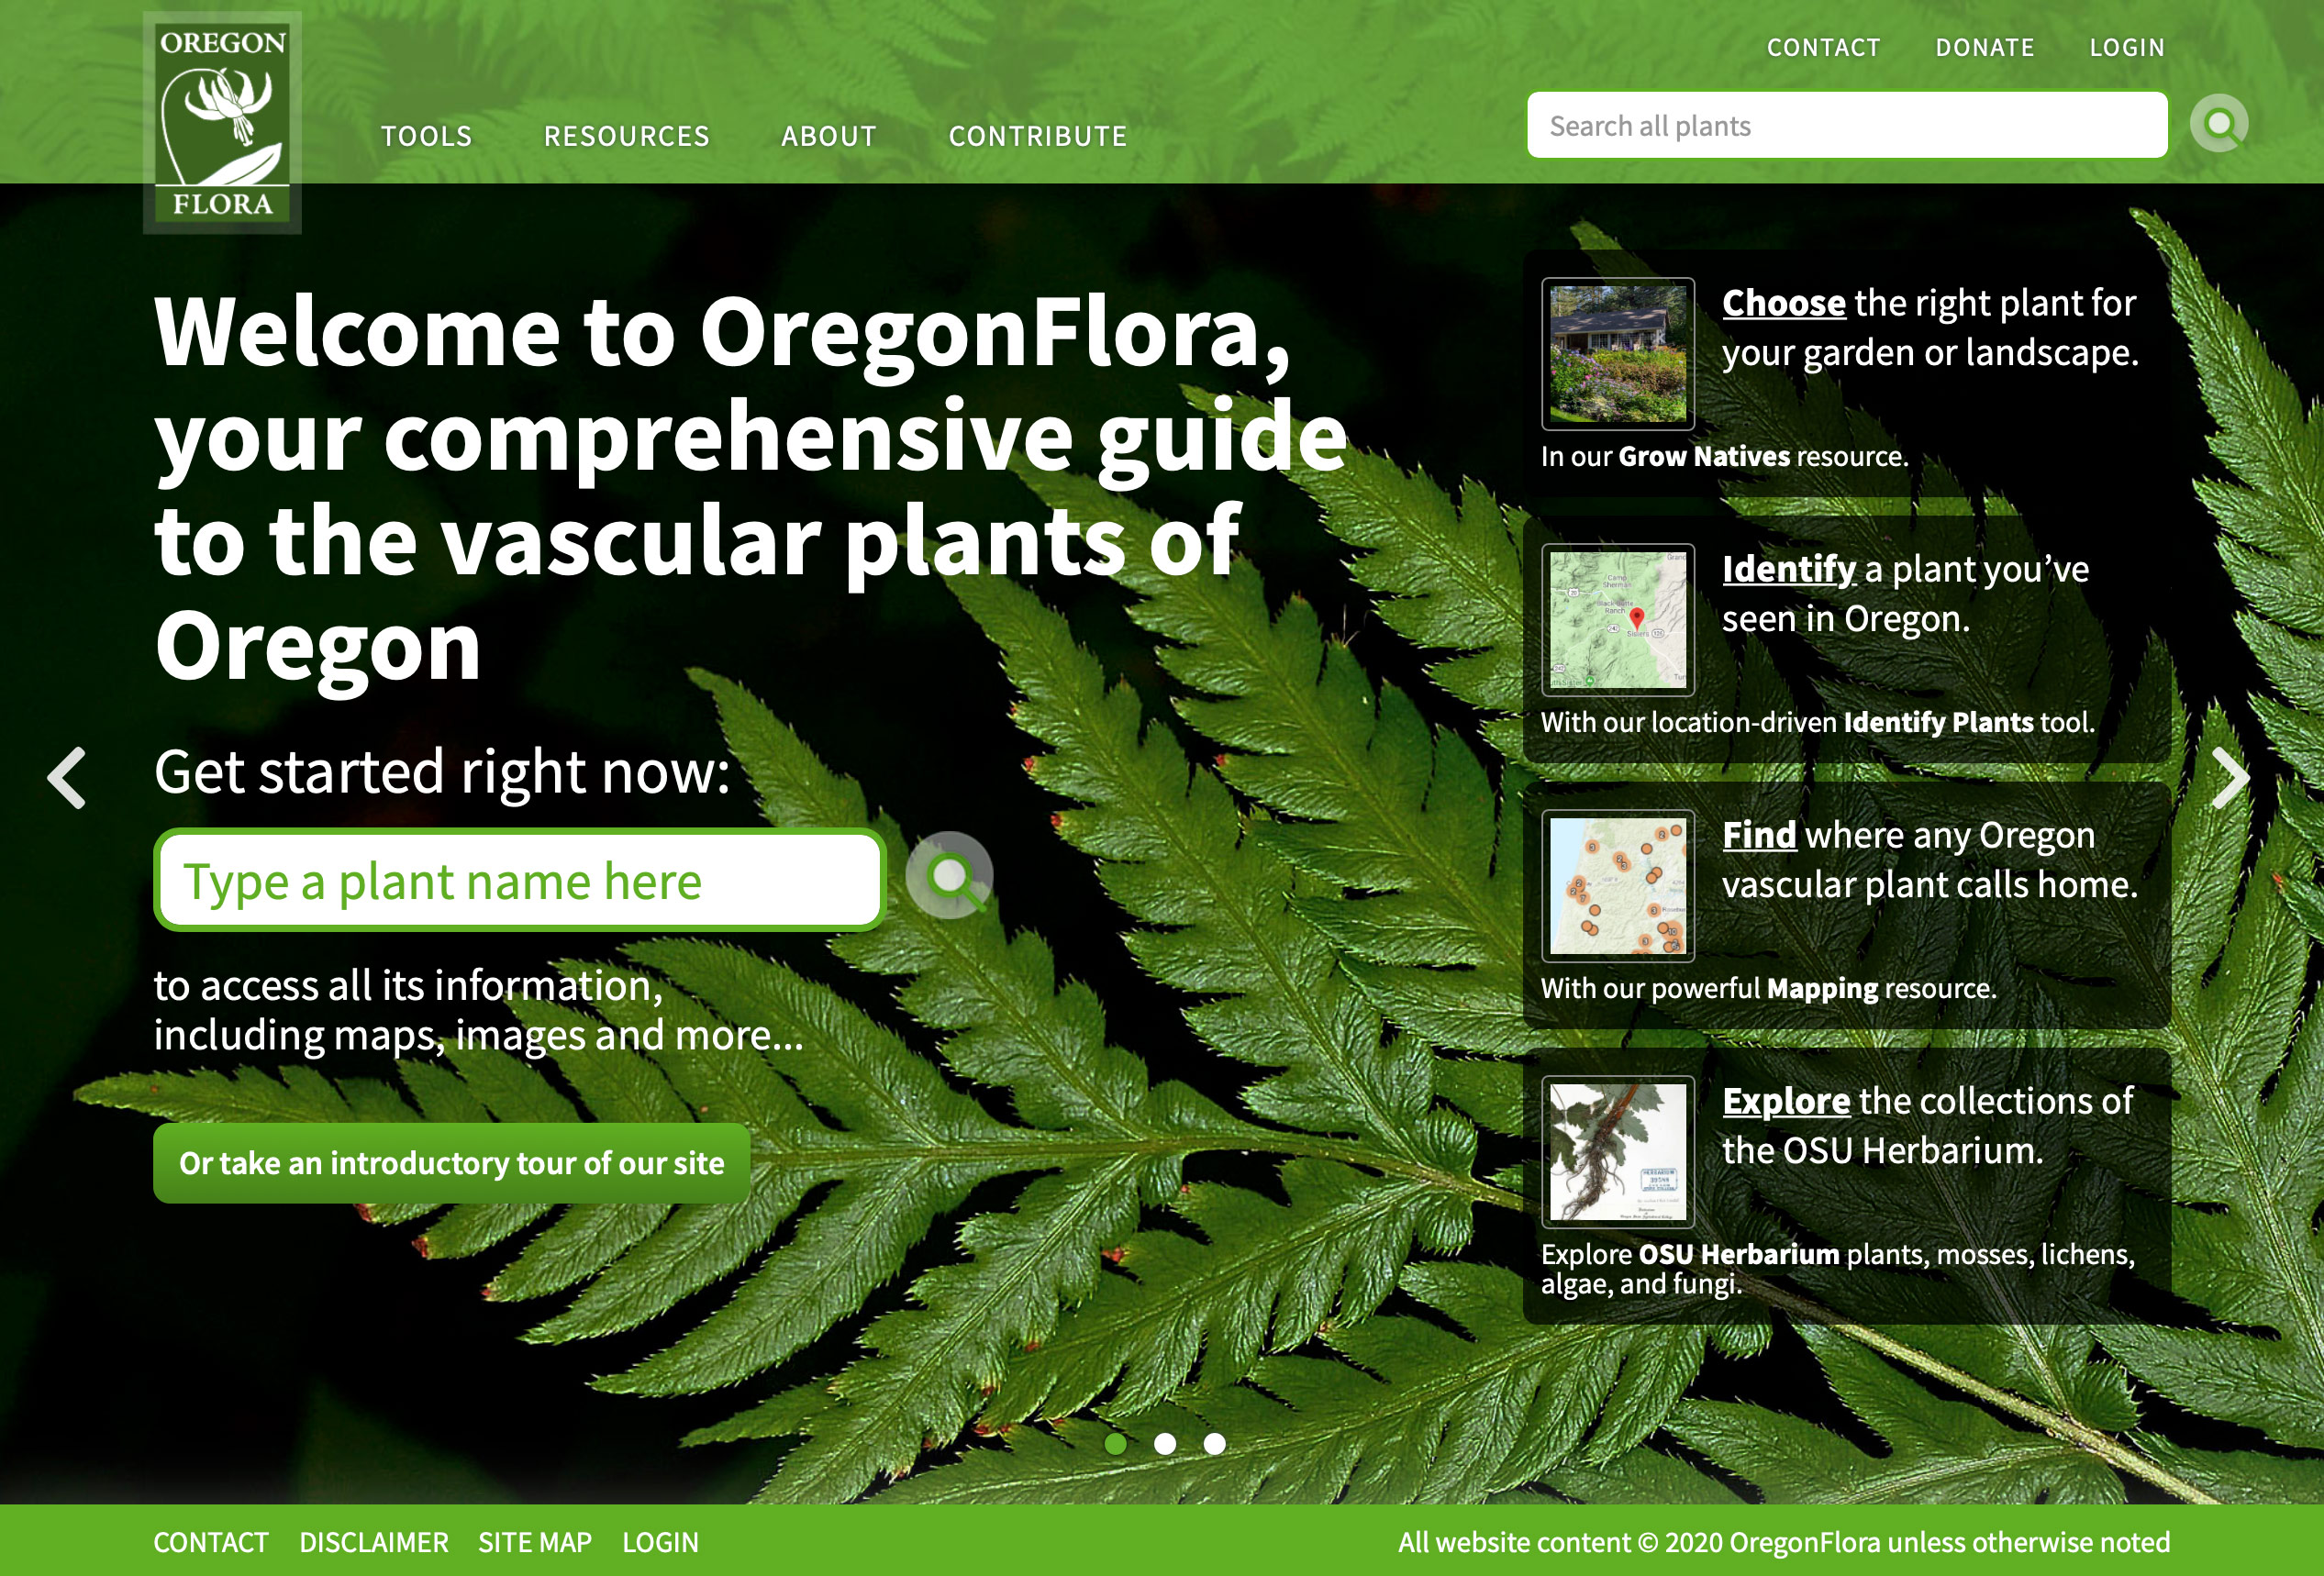 Oregon Flora home page (Matt Giraud, Creative Director, Gyroscope Creative)